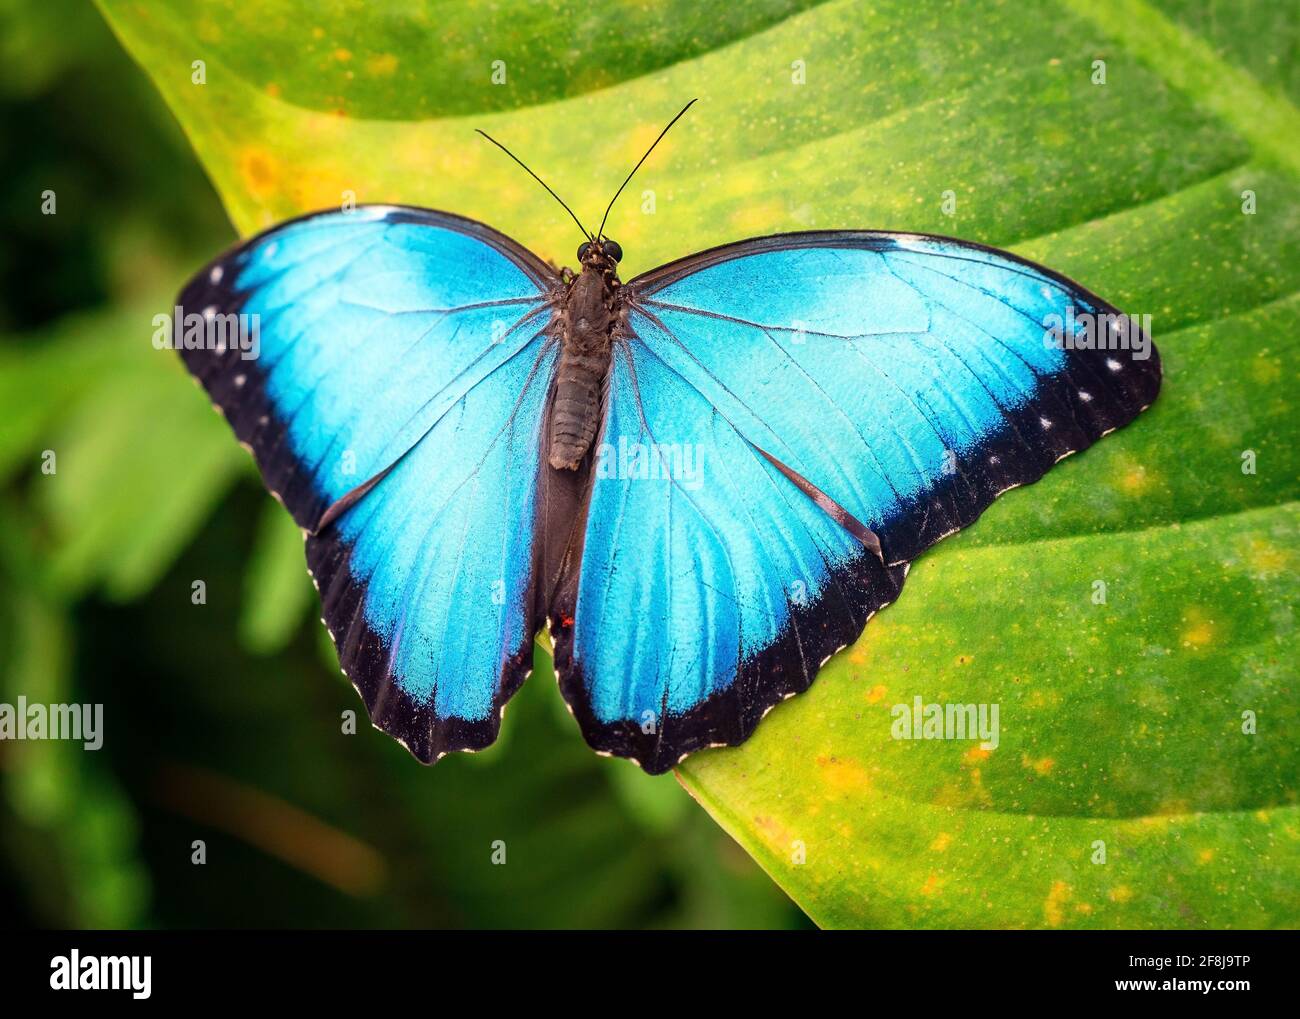 Blauer Morpho-Schmetterling (Morpho menelaus) aus der Nähe, Mindo, Ecuador. Stockfoto